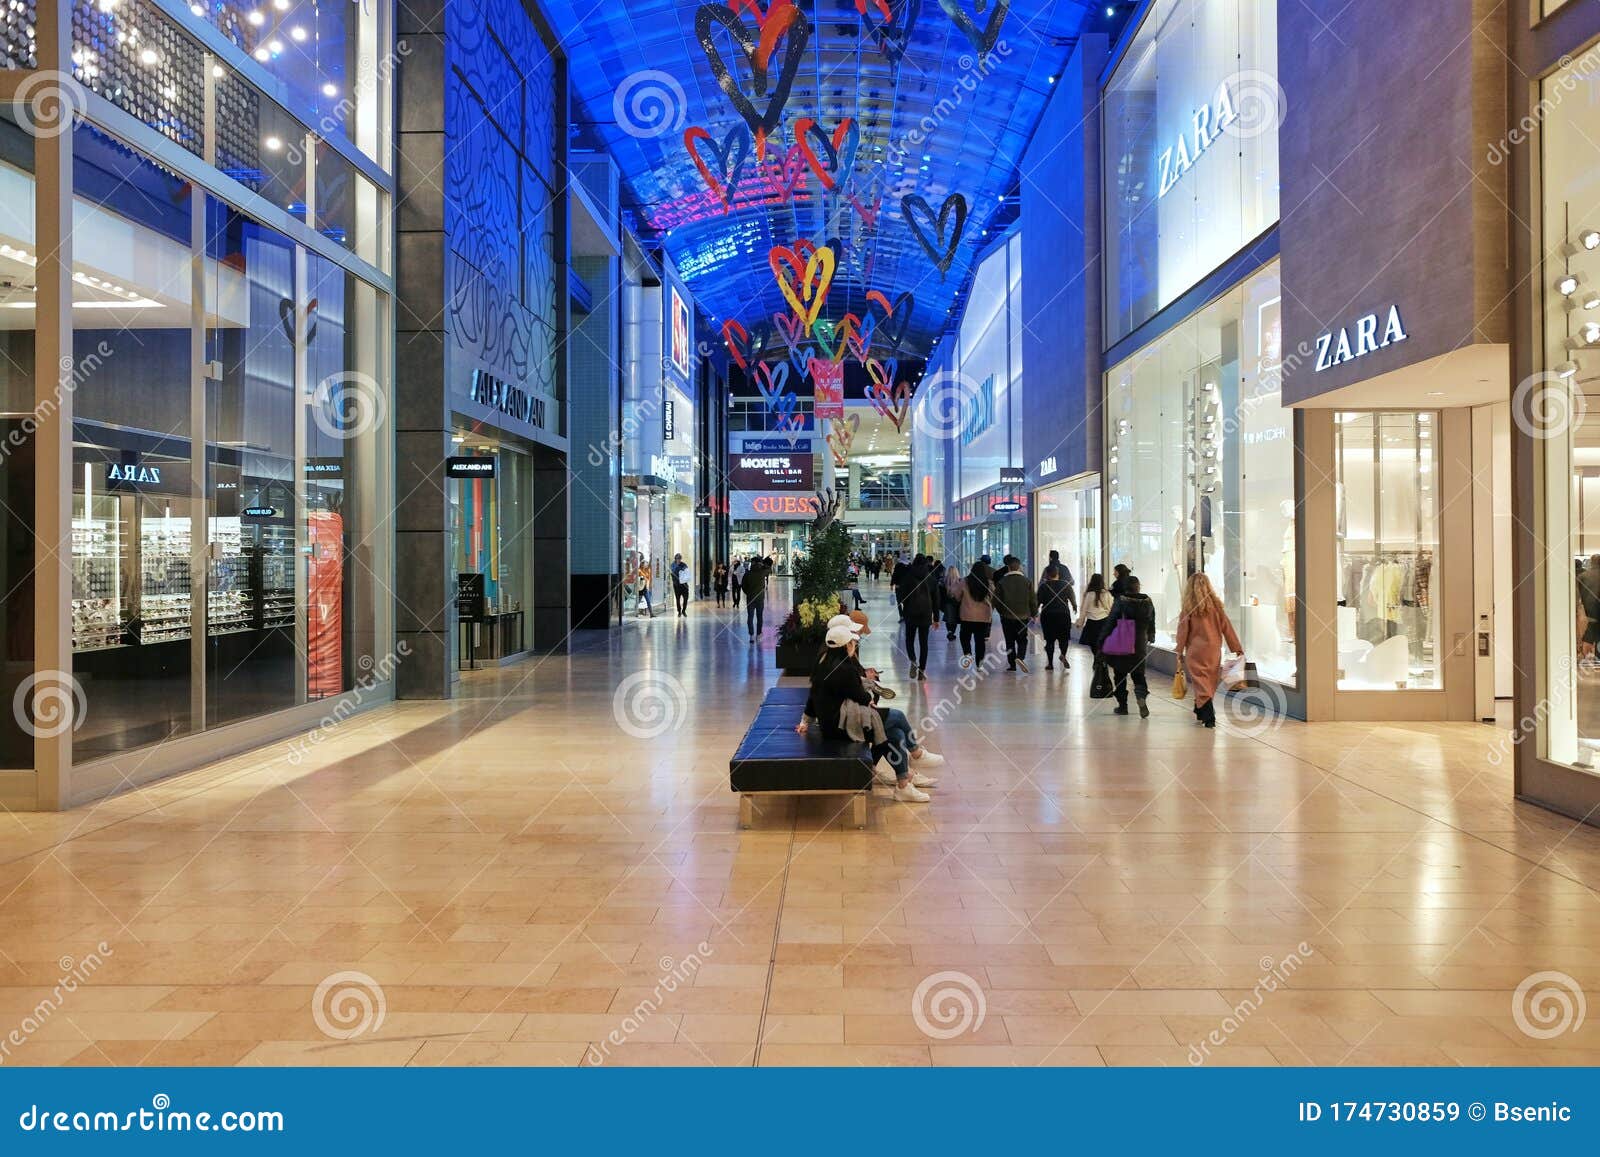 Yorkdale Shopping Mall - Toronto, Canada - Shoppers Walking through the ...